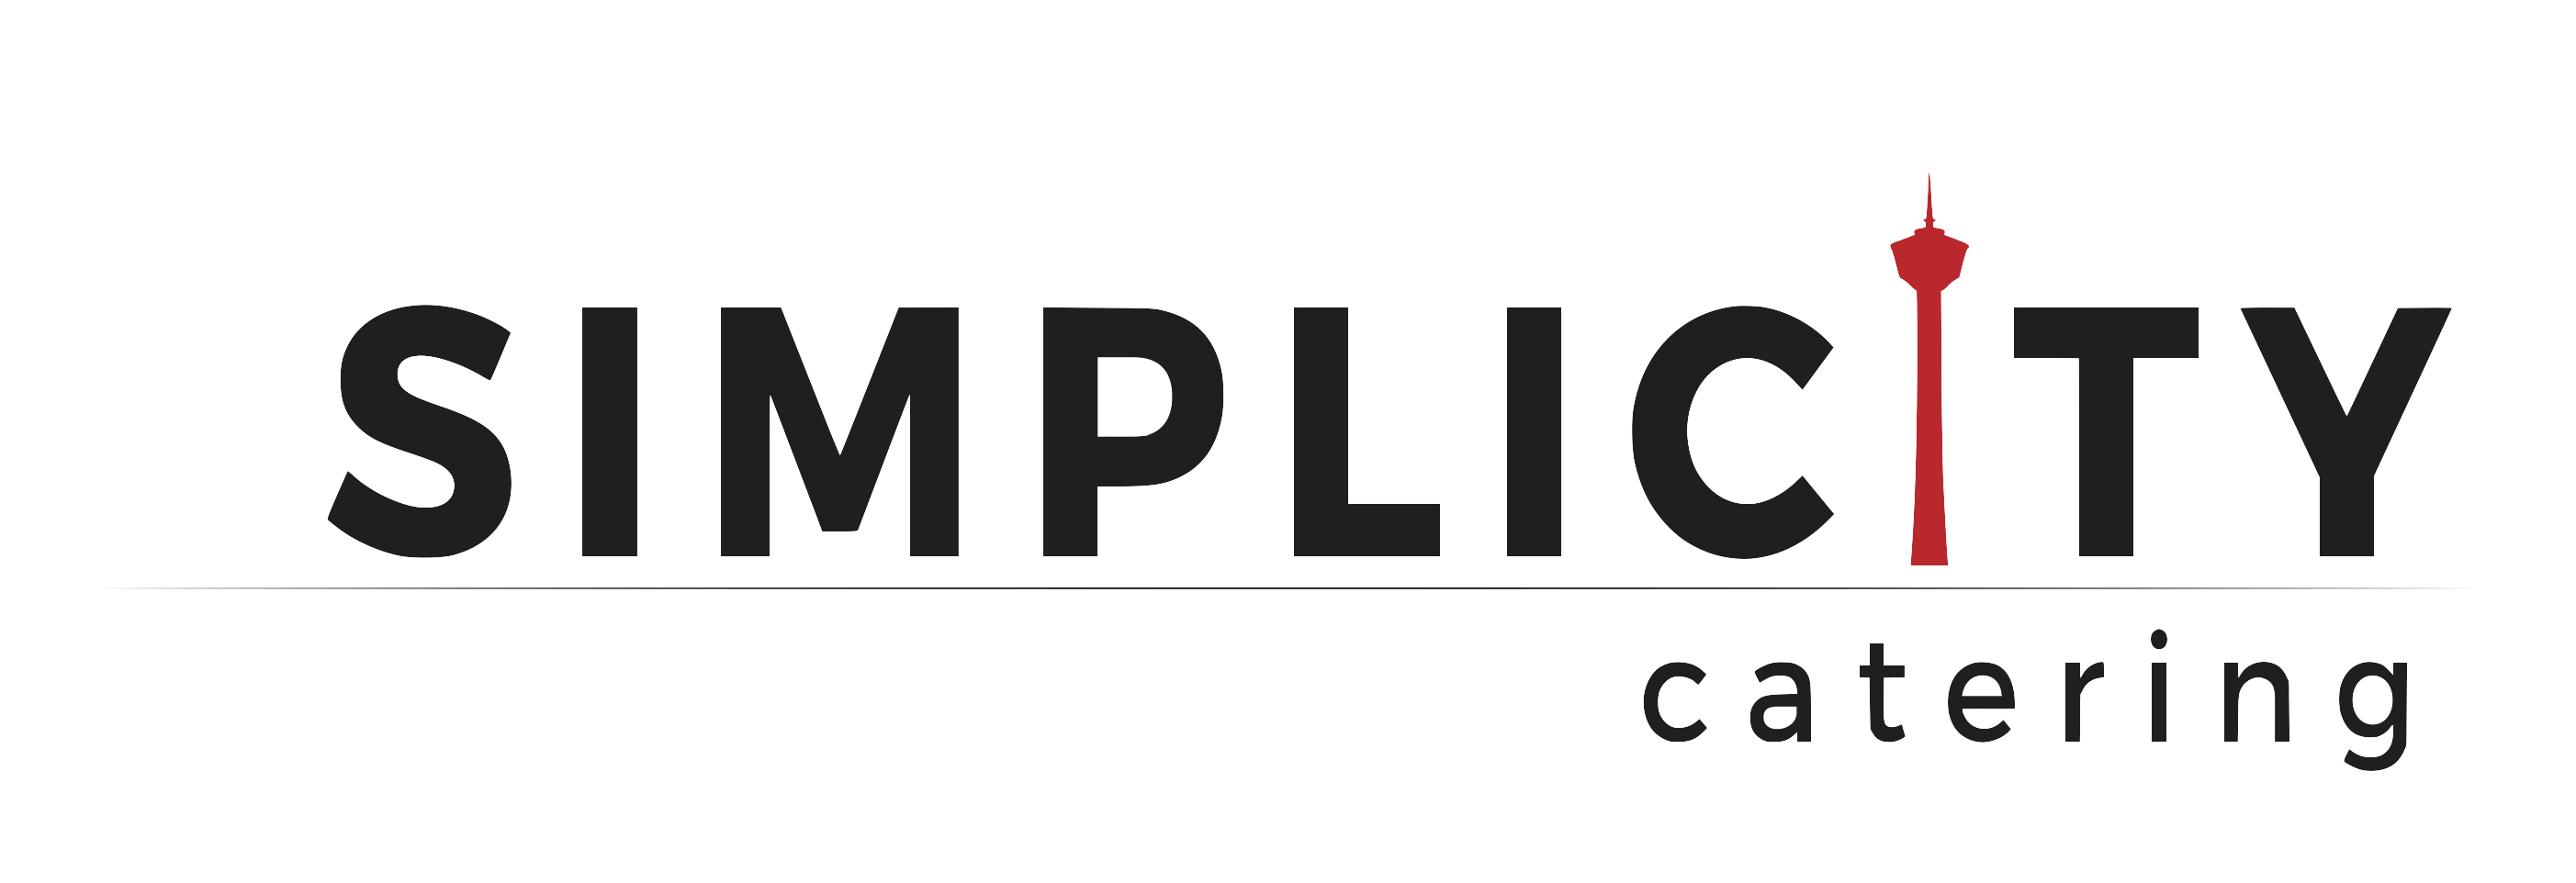 Simplicity Catering - Logo